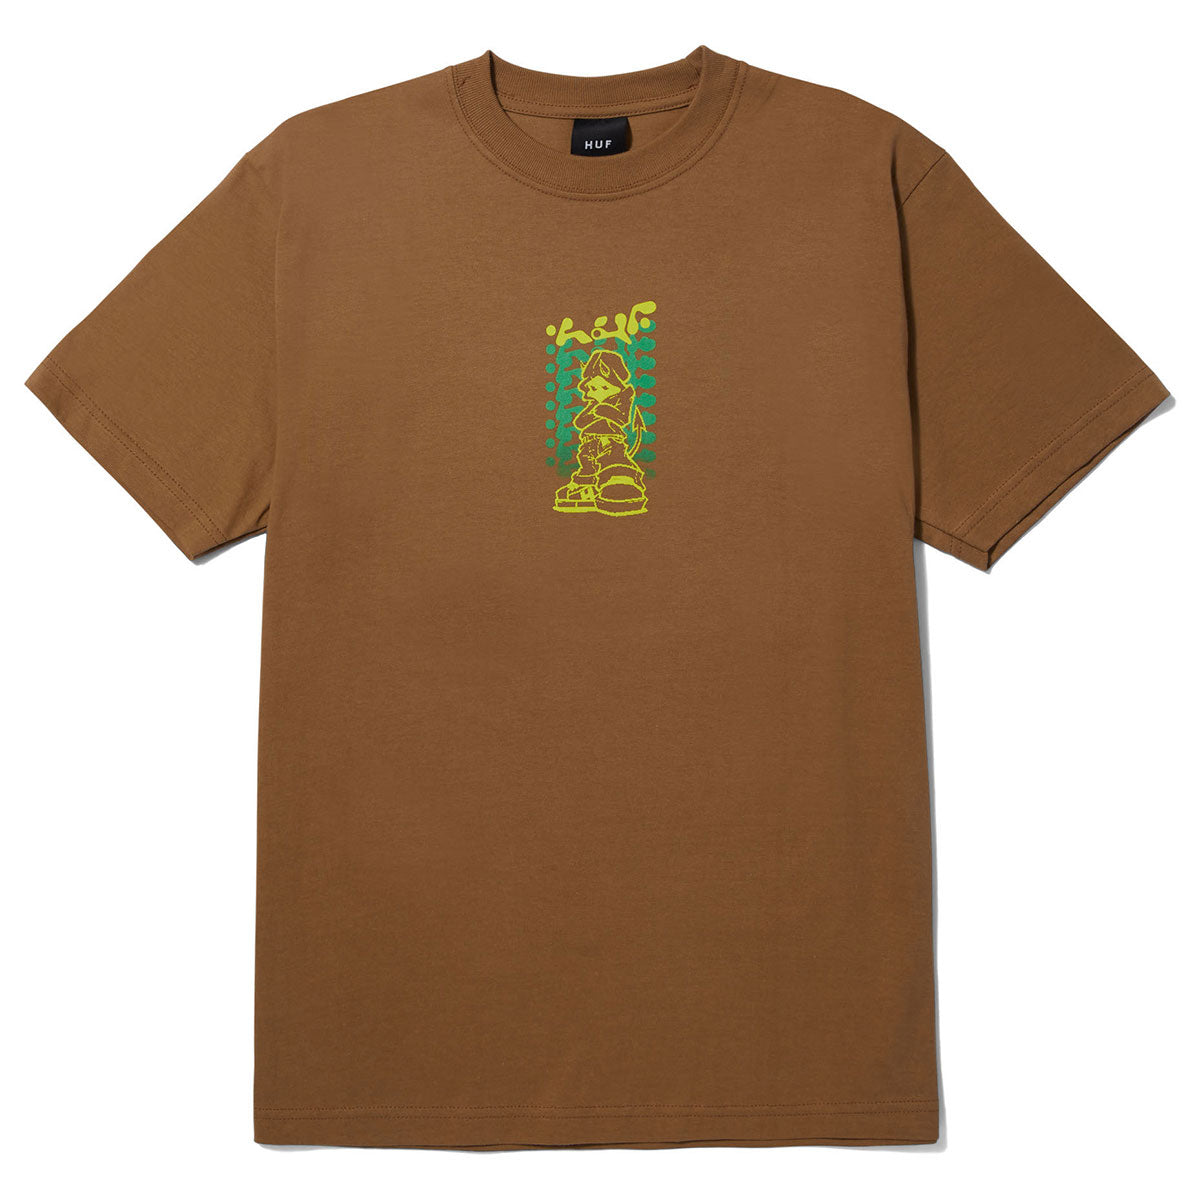 HUF Hell Razor T-Shirt - Camel image 1